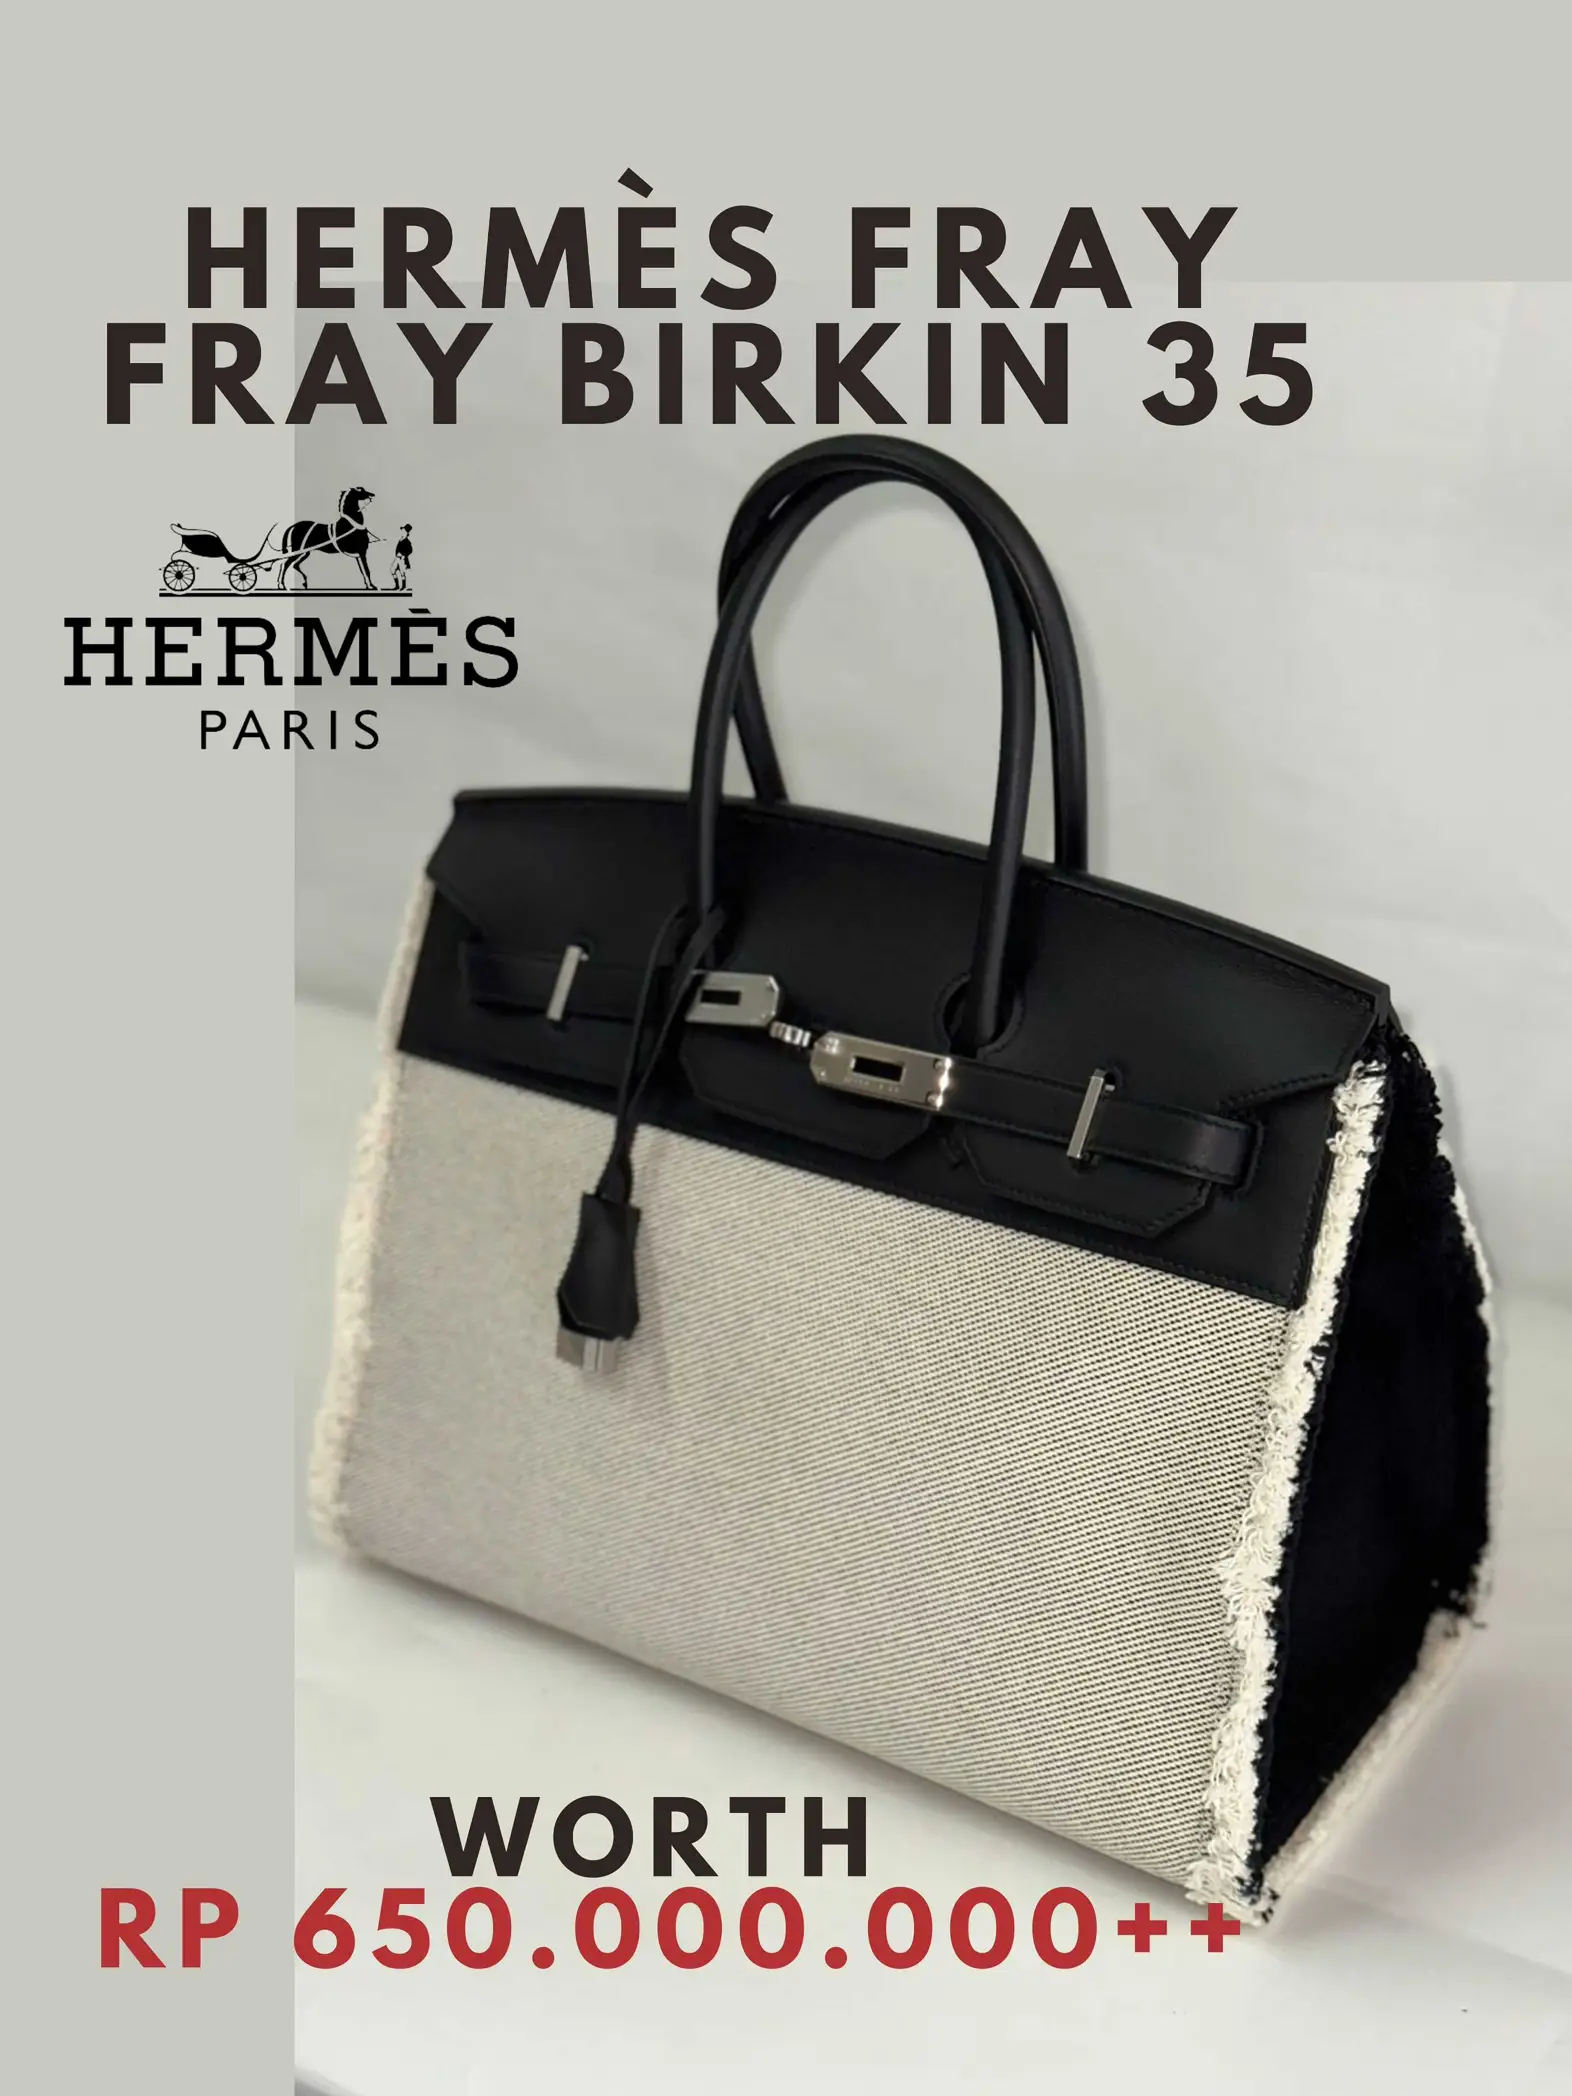 Hermes Birkin 35 Fray Fray